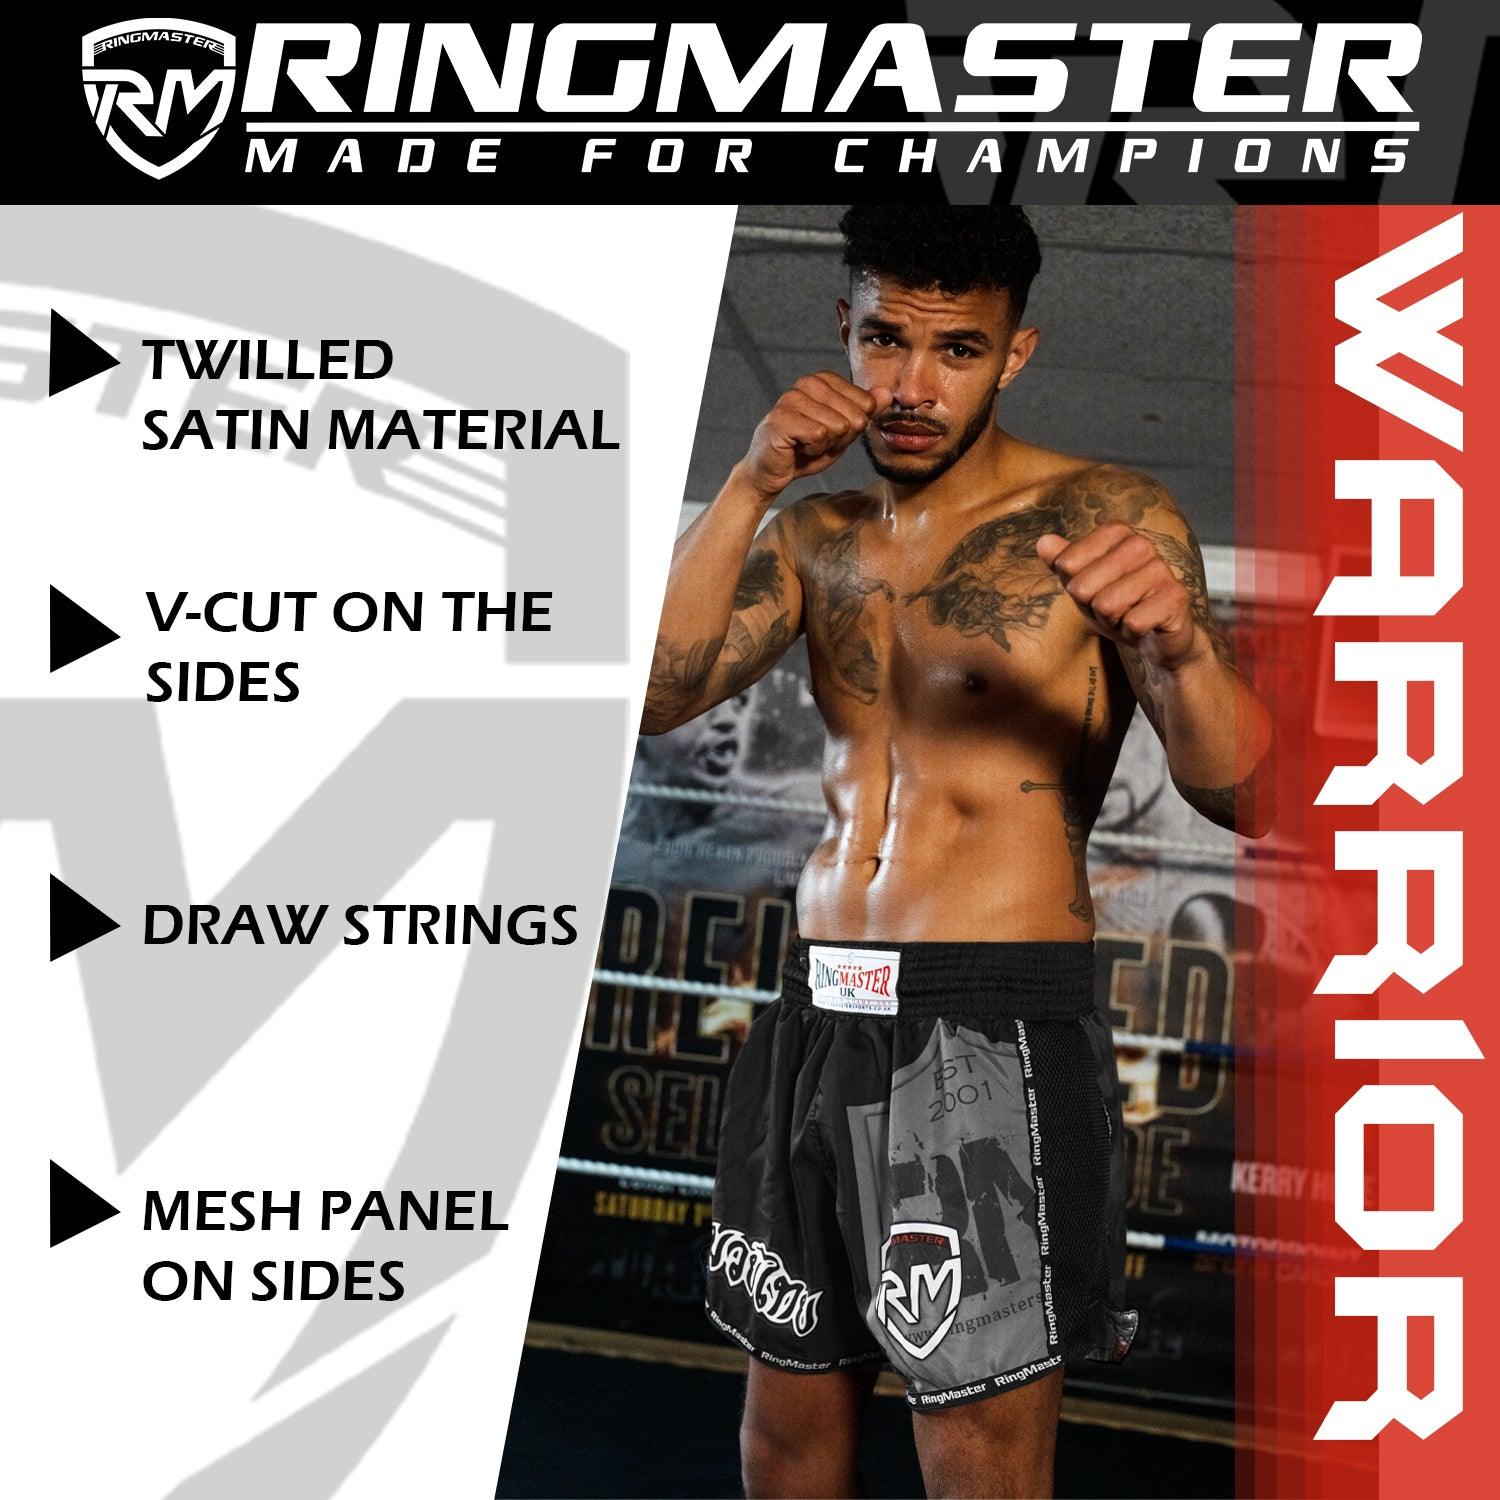 RingMaster Sports Warrior Thai / Kickboxing Shorts Black - RingMaster Sports